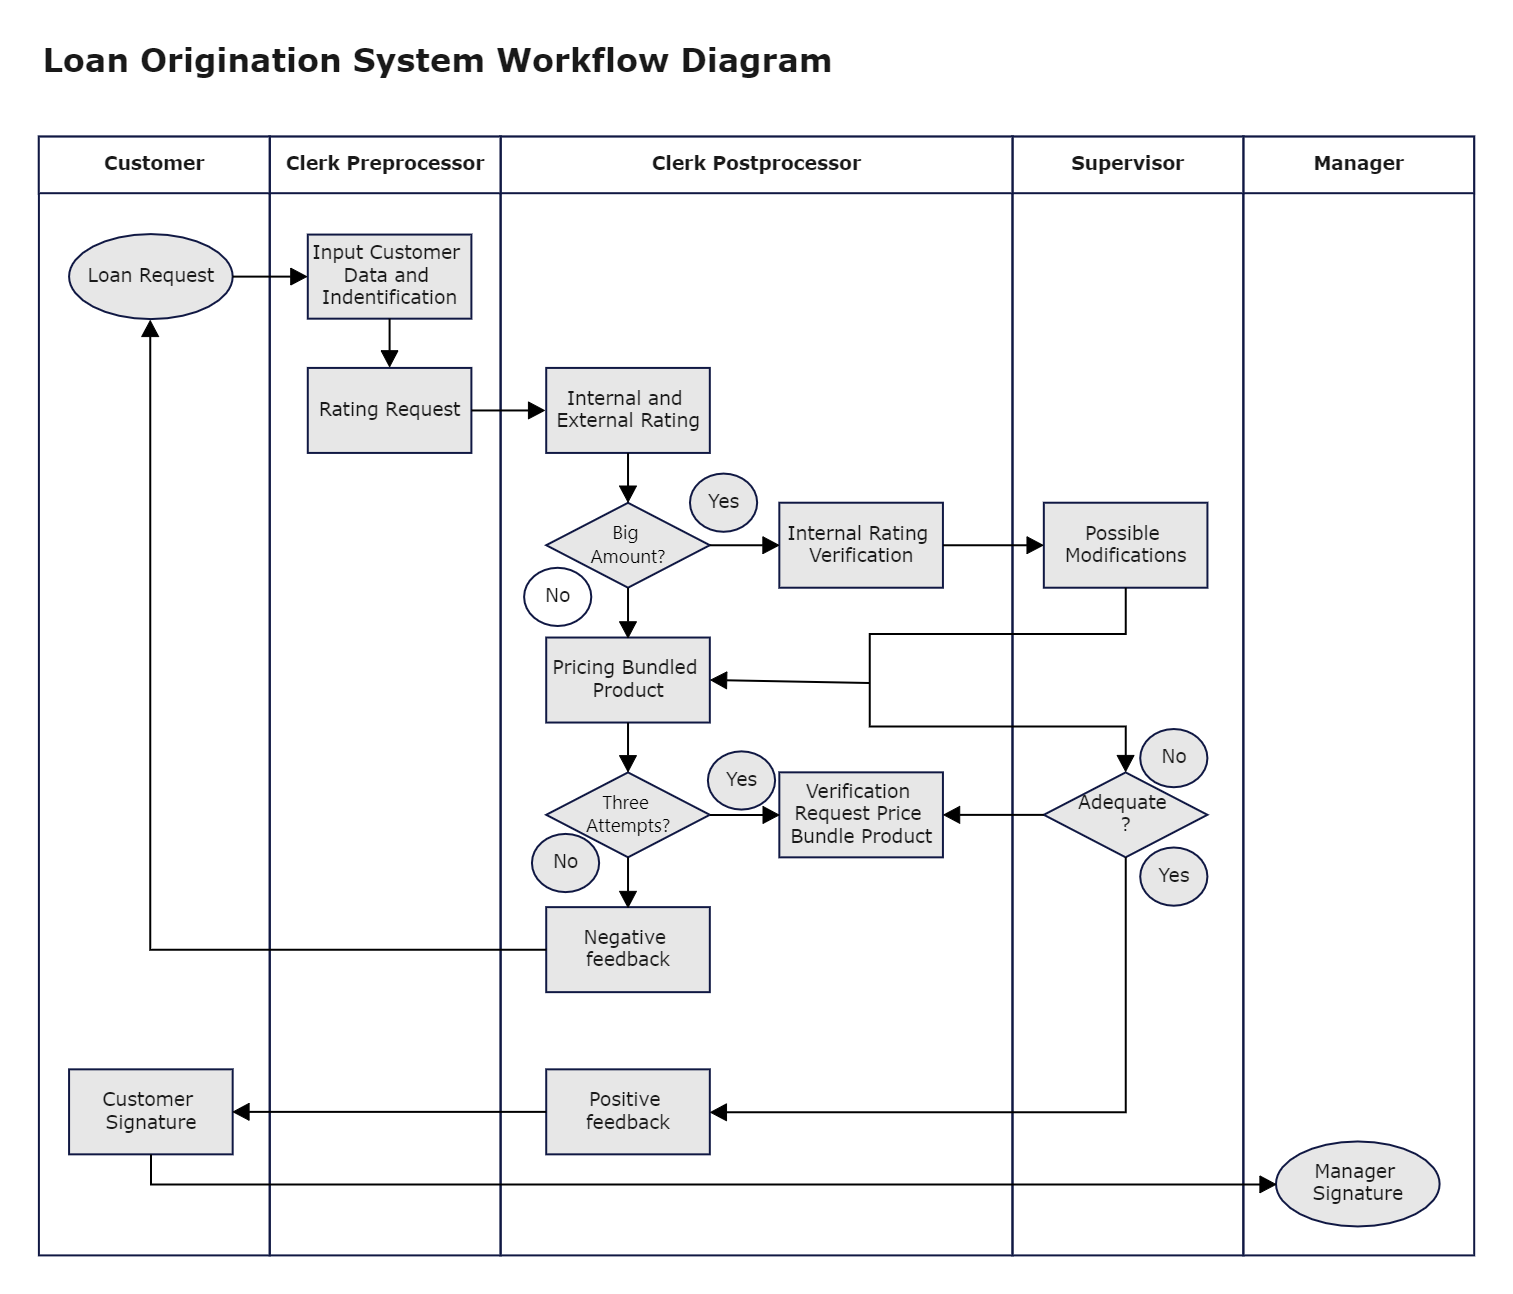 Loan origination system workflow diagram